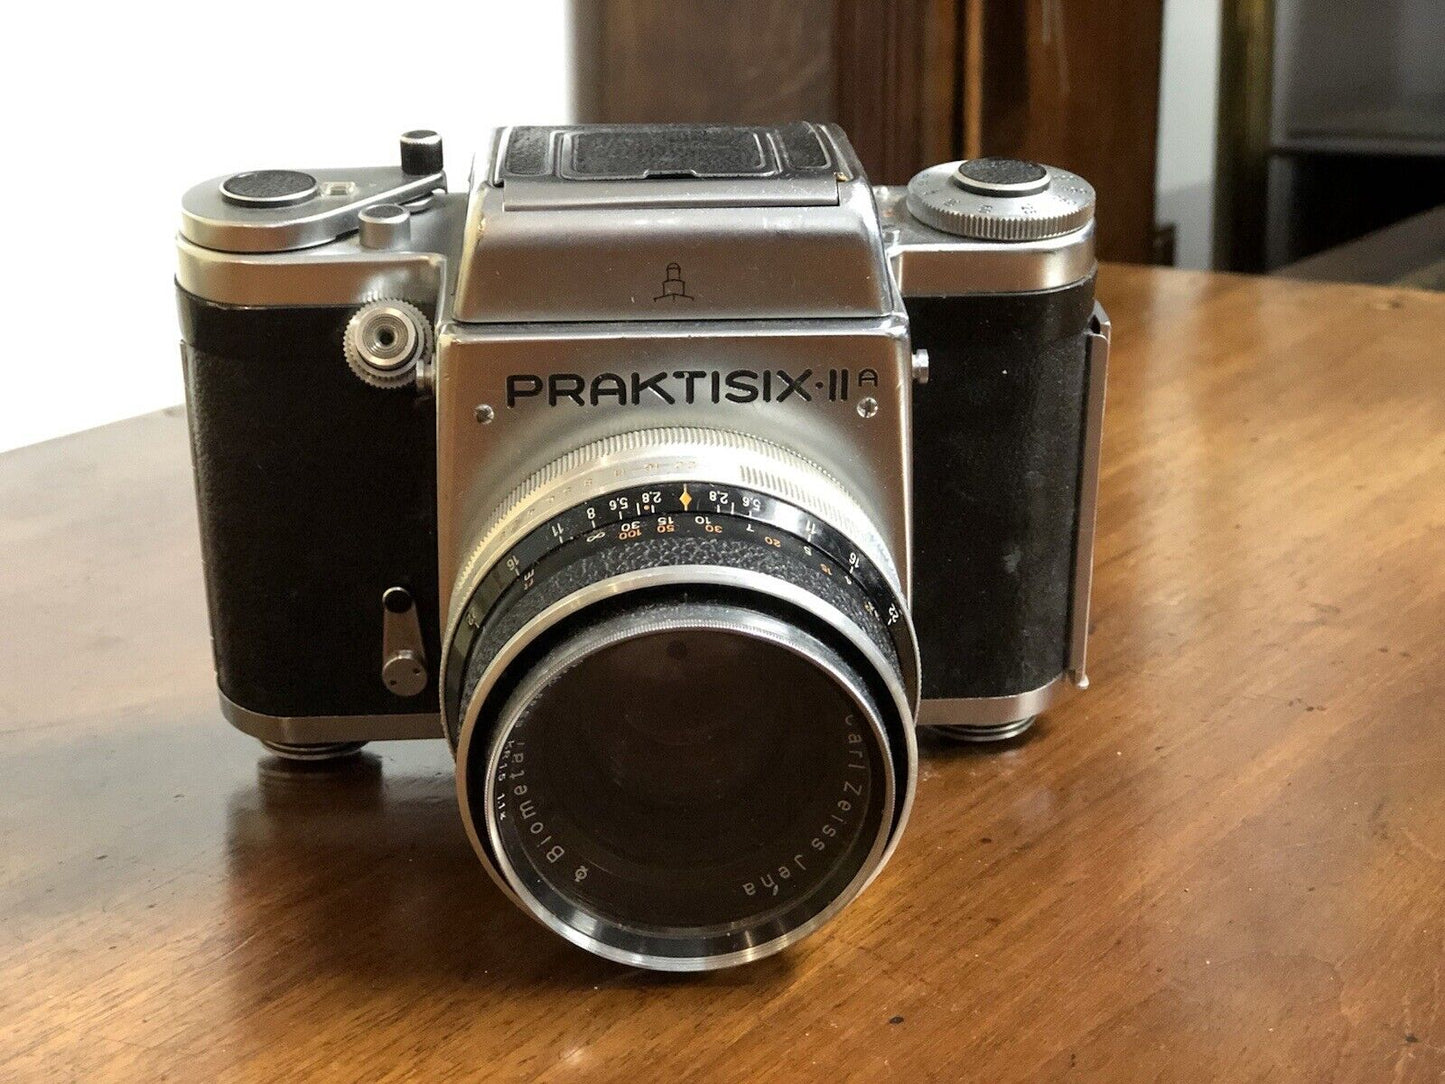 Vintage camera. Praktisix II a